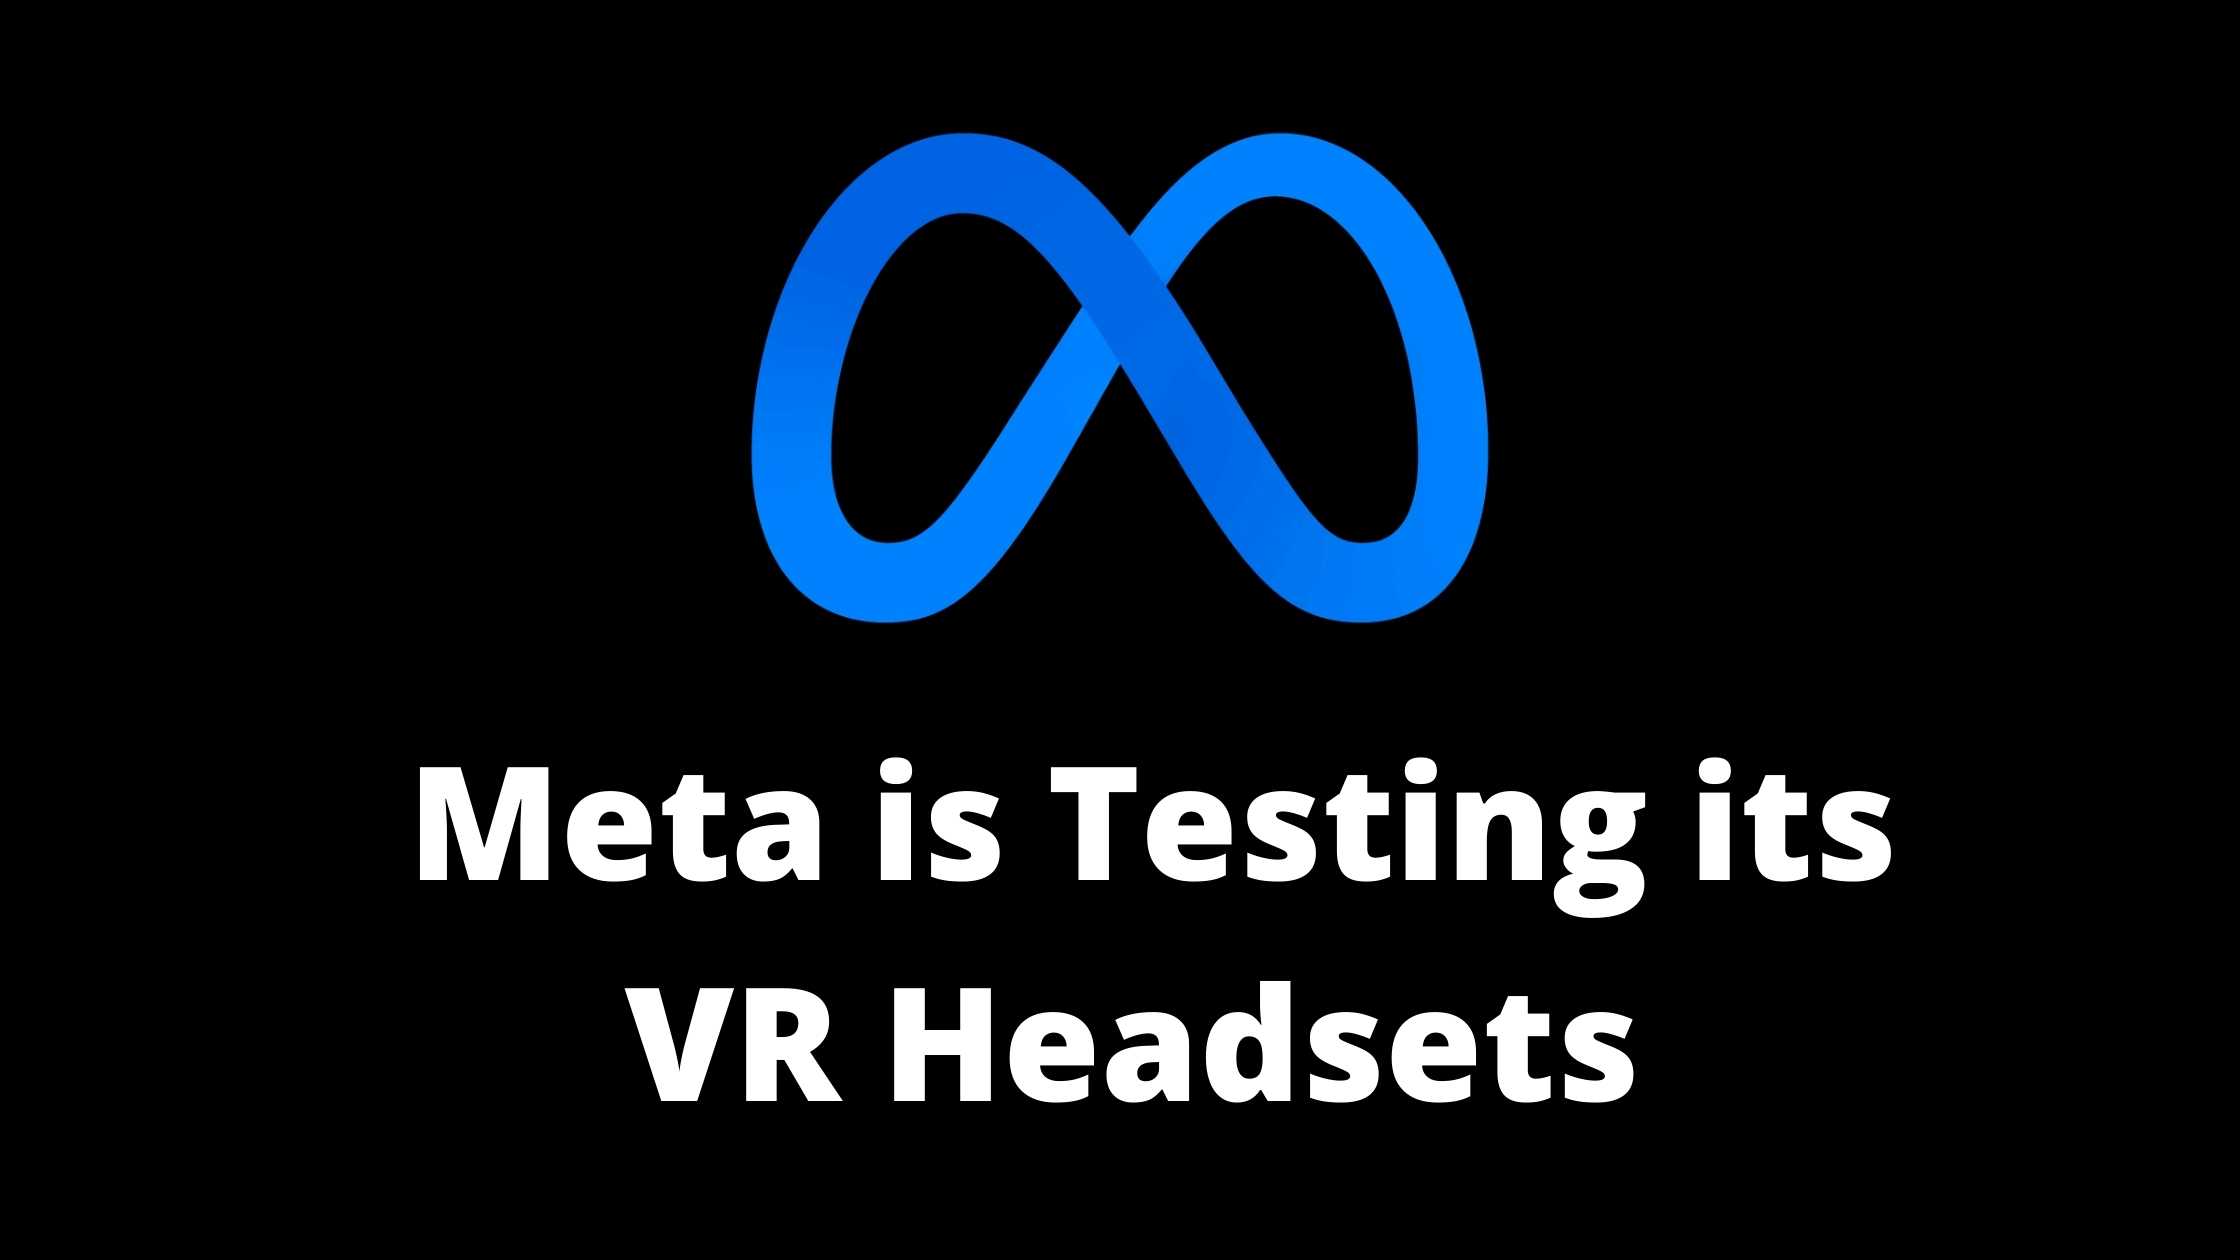 Meta VR headset news